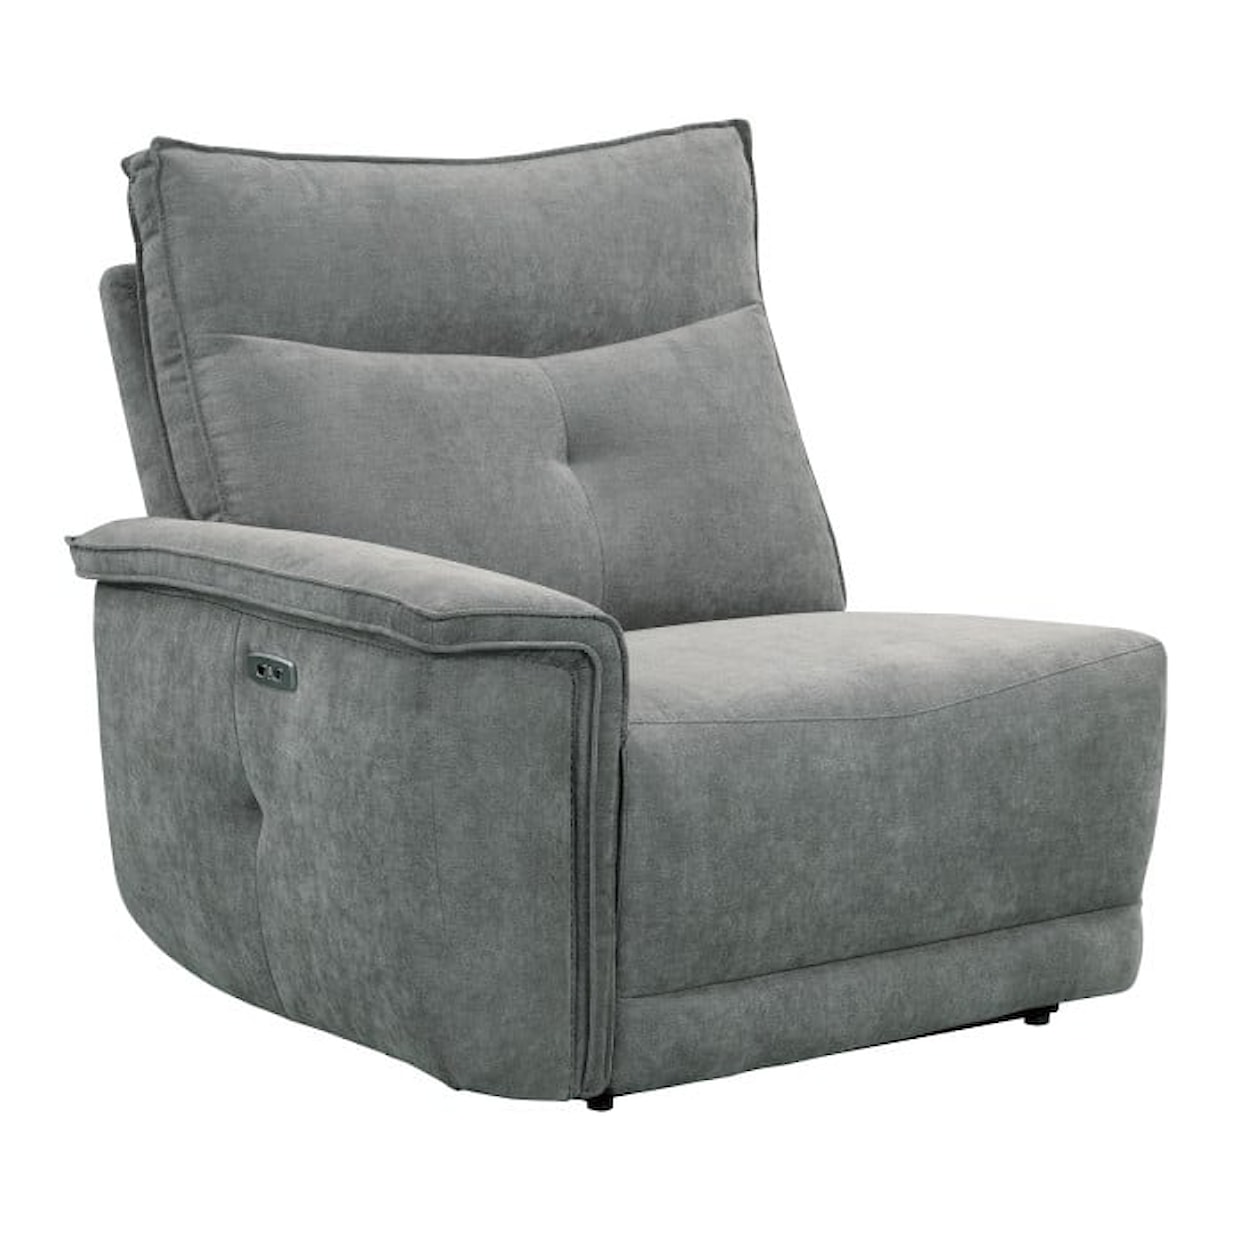 Homelegance Furniture Tesoro Double Reclining Sofa